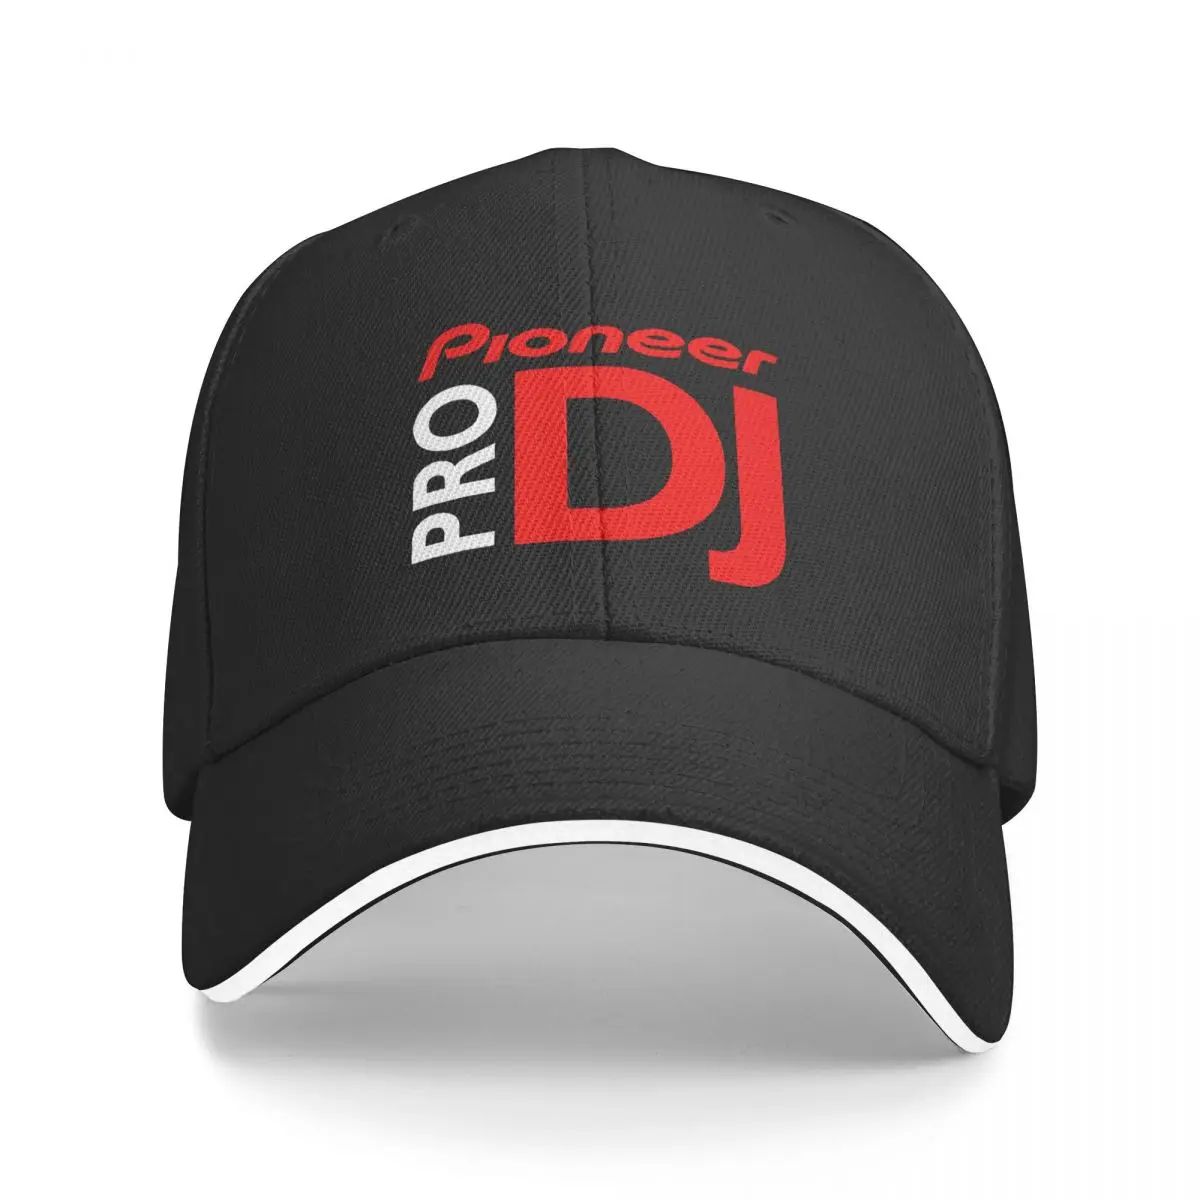 

Uomo Donna Pioneer Pro Cdj 2000 New fashion baseball cap men and women outdoor sports sun visor simple peaked cap